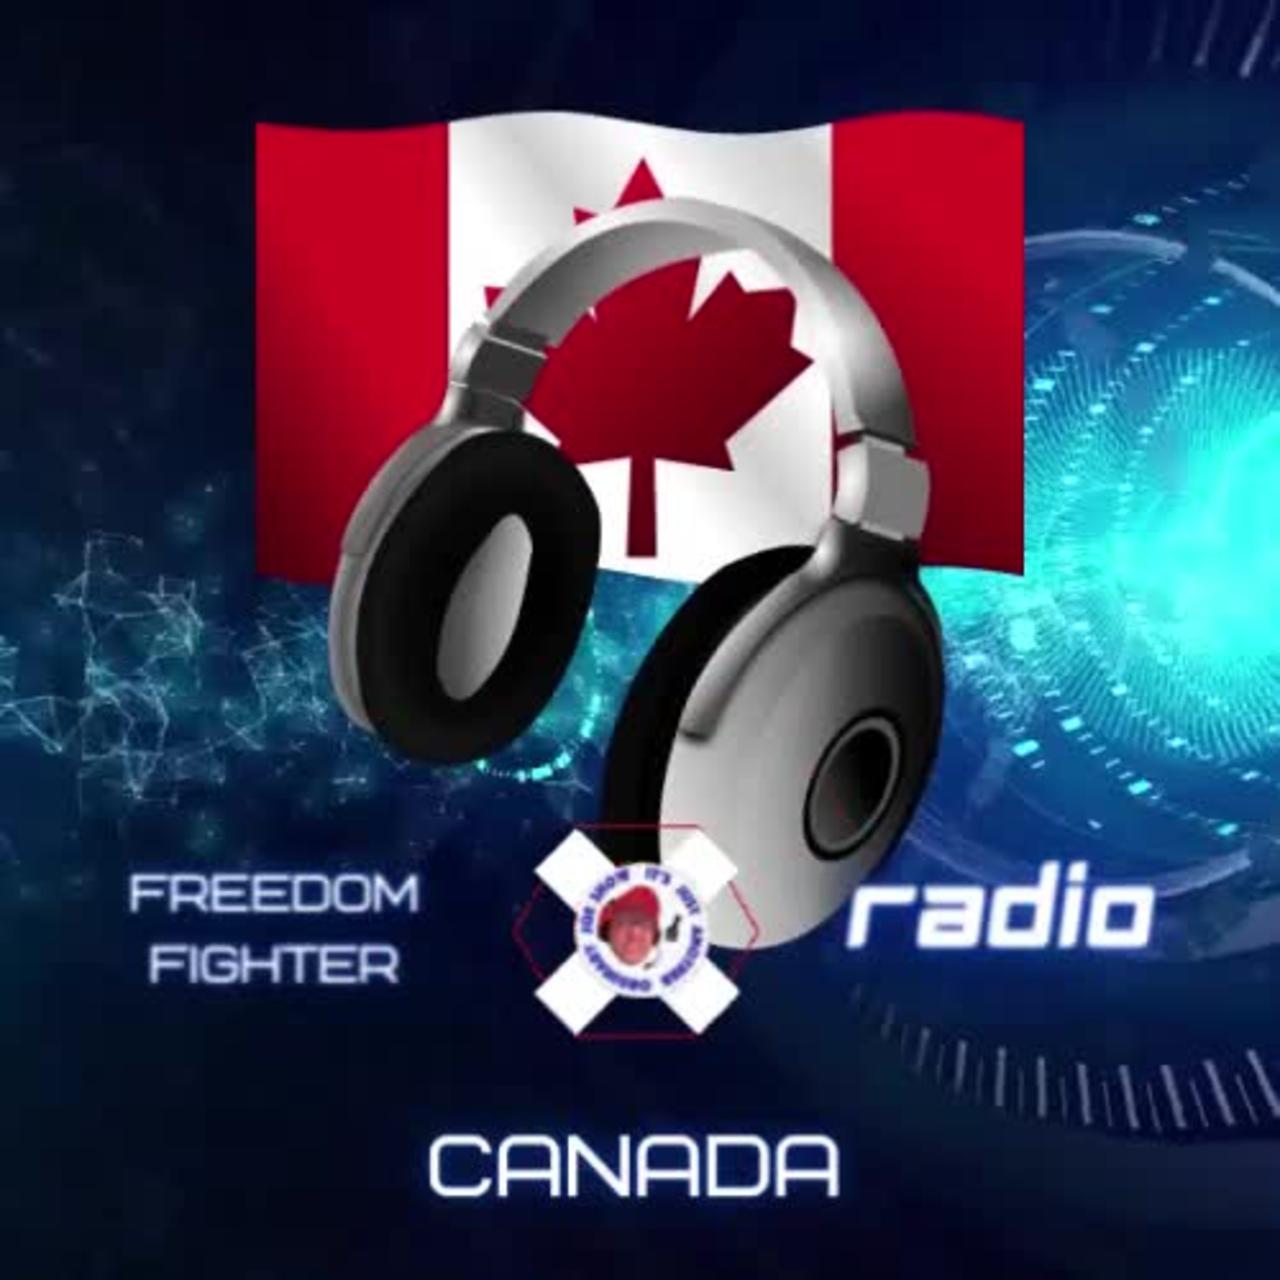 Tuesday Jan 31st Freedom Fighter Radio Tonight